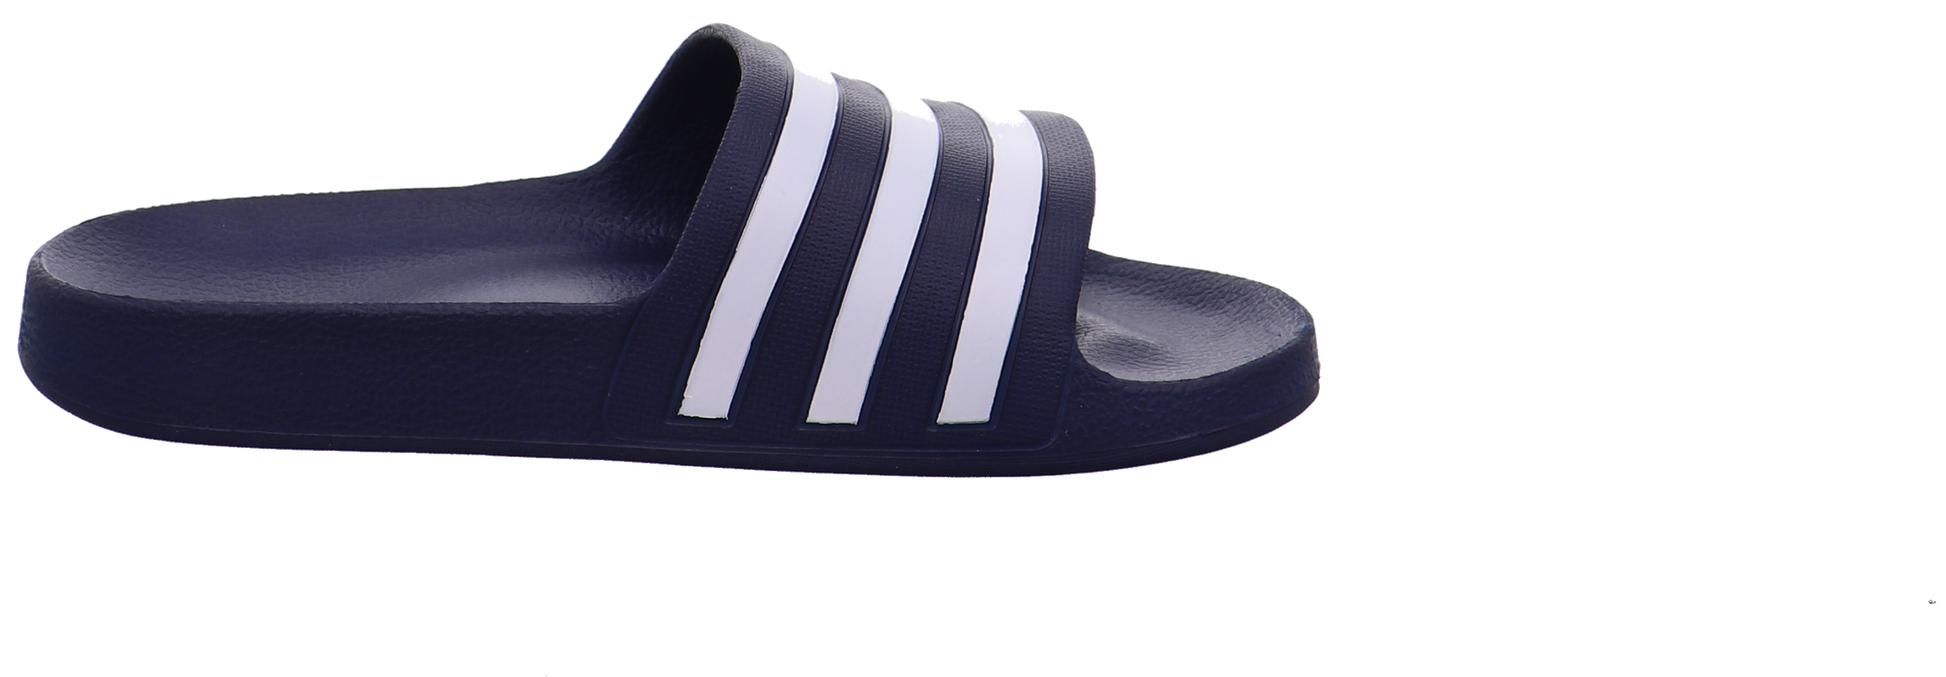 Adidas Schuhe  blau Bild11